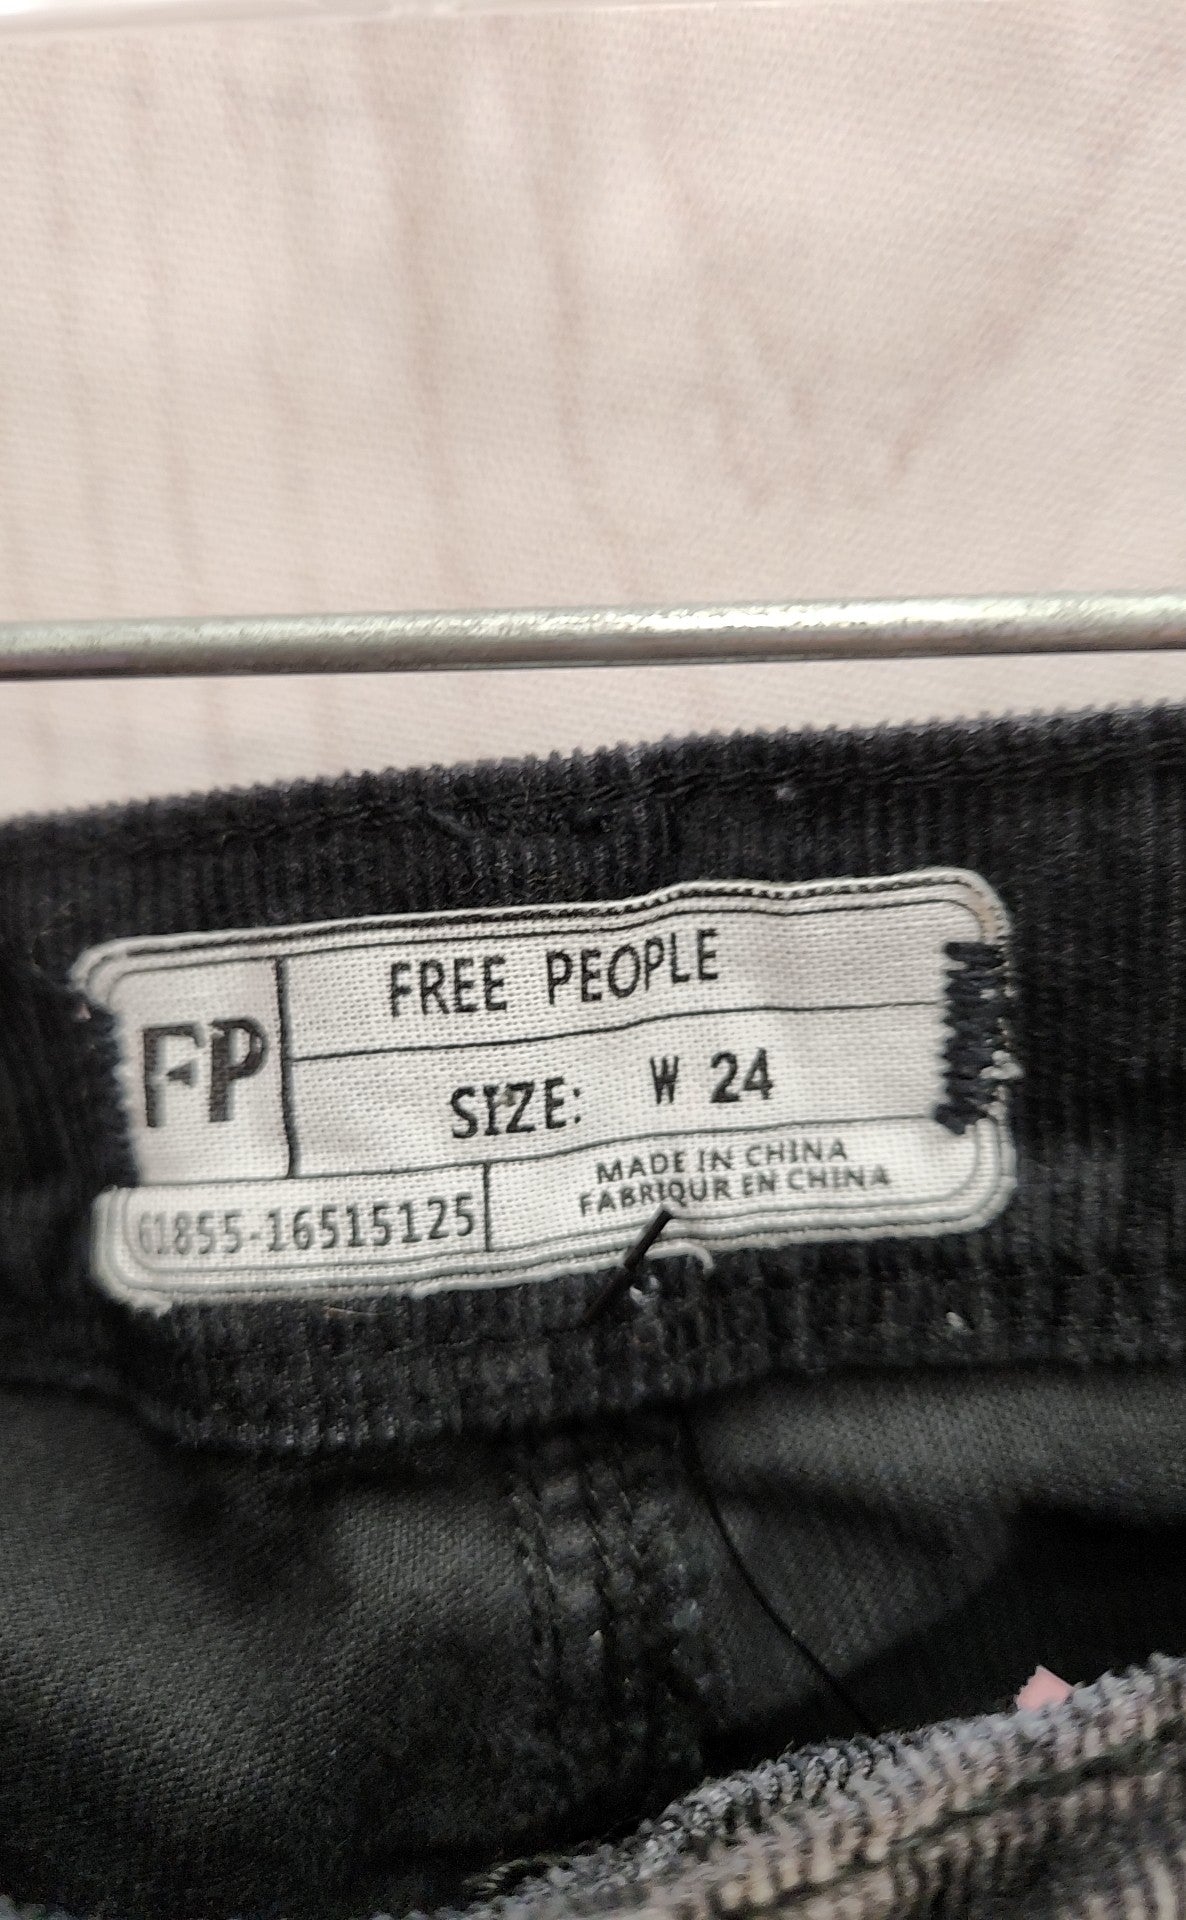 Free People Women's Size 24 (00) Black Pants